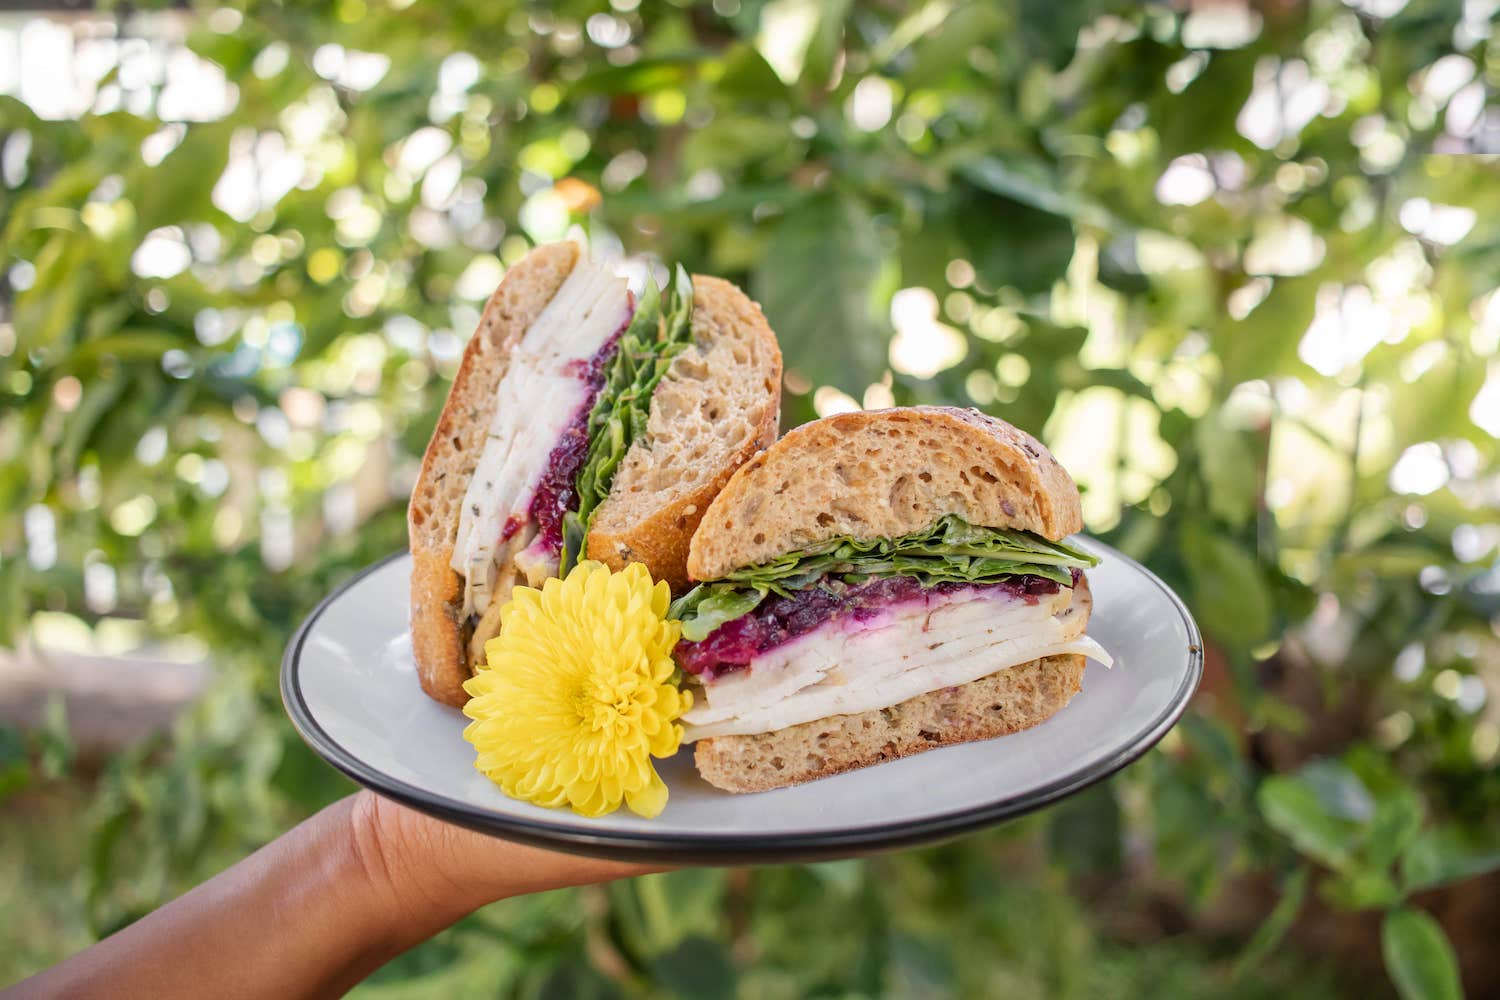 Honolulu Coffee seasonal menu item: Harvest Turkey Sandwich